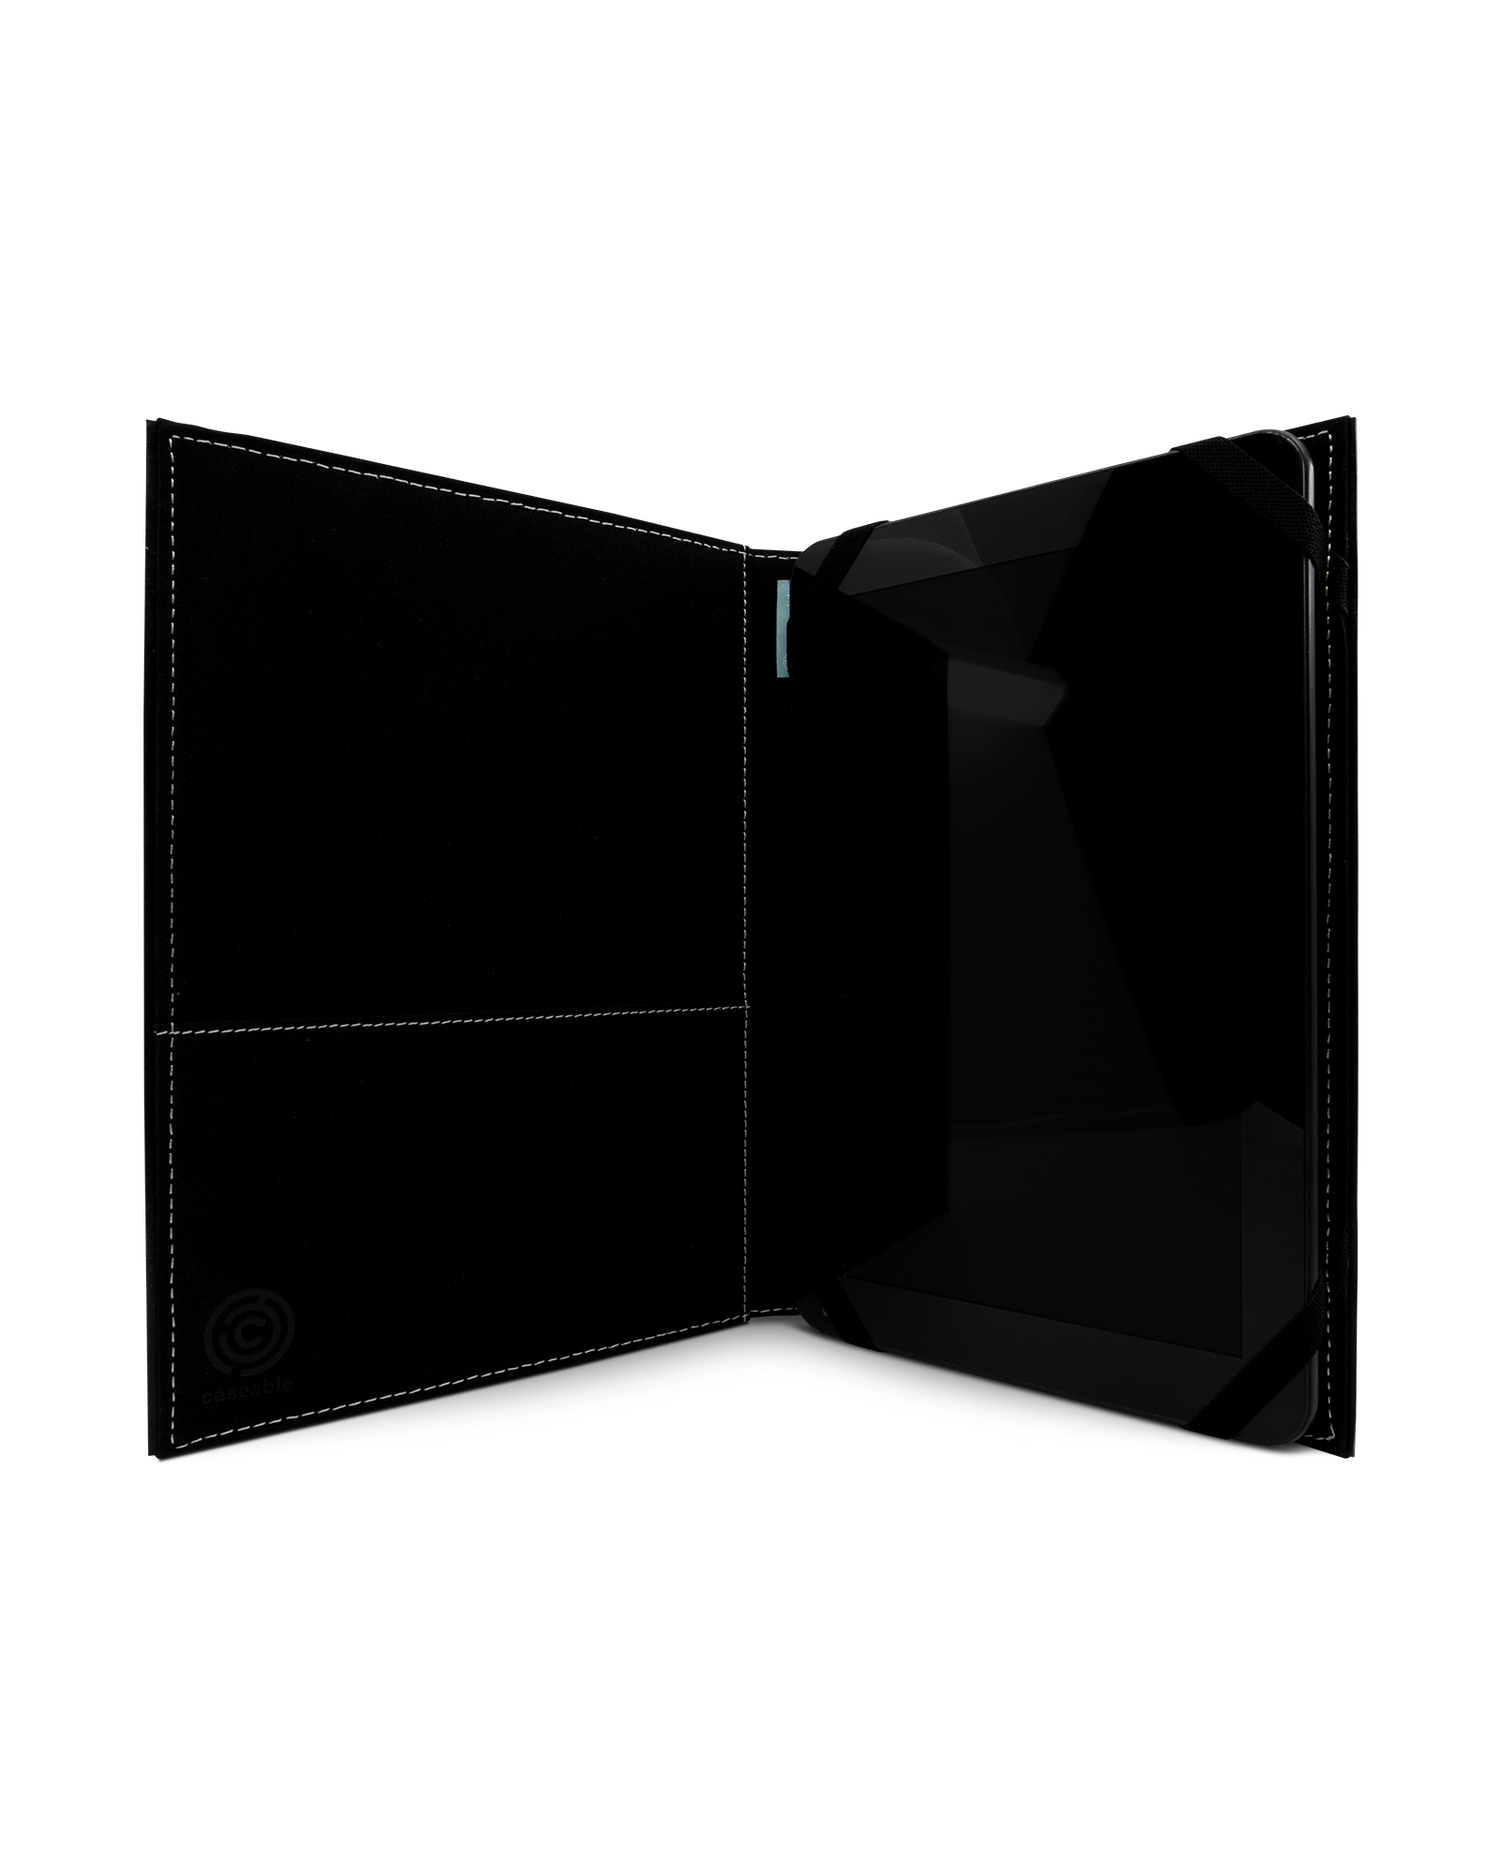 Spec Ops Dark Tablet Case M: Opened interior view